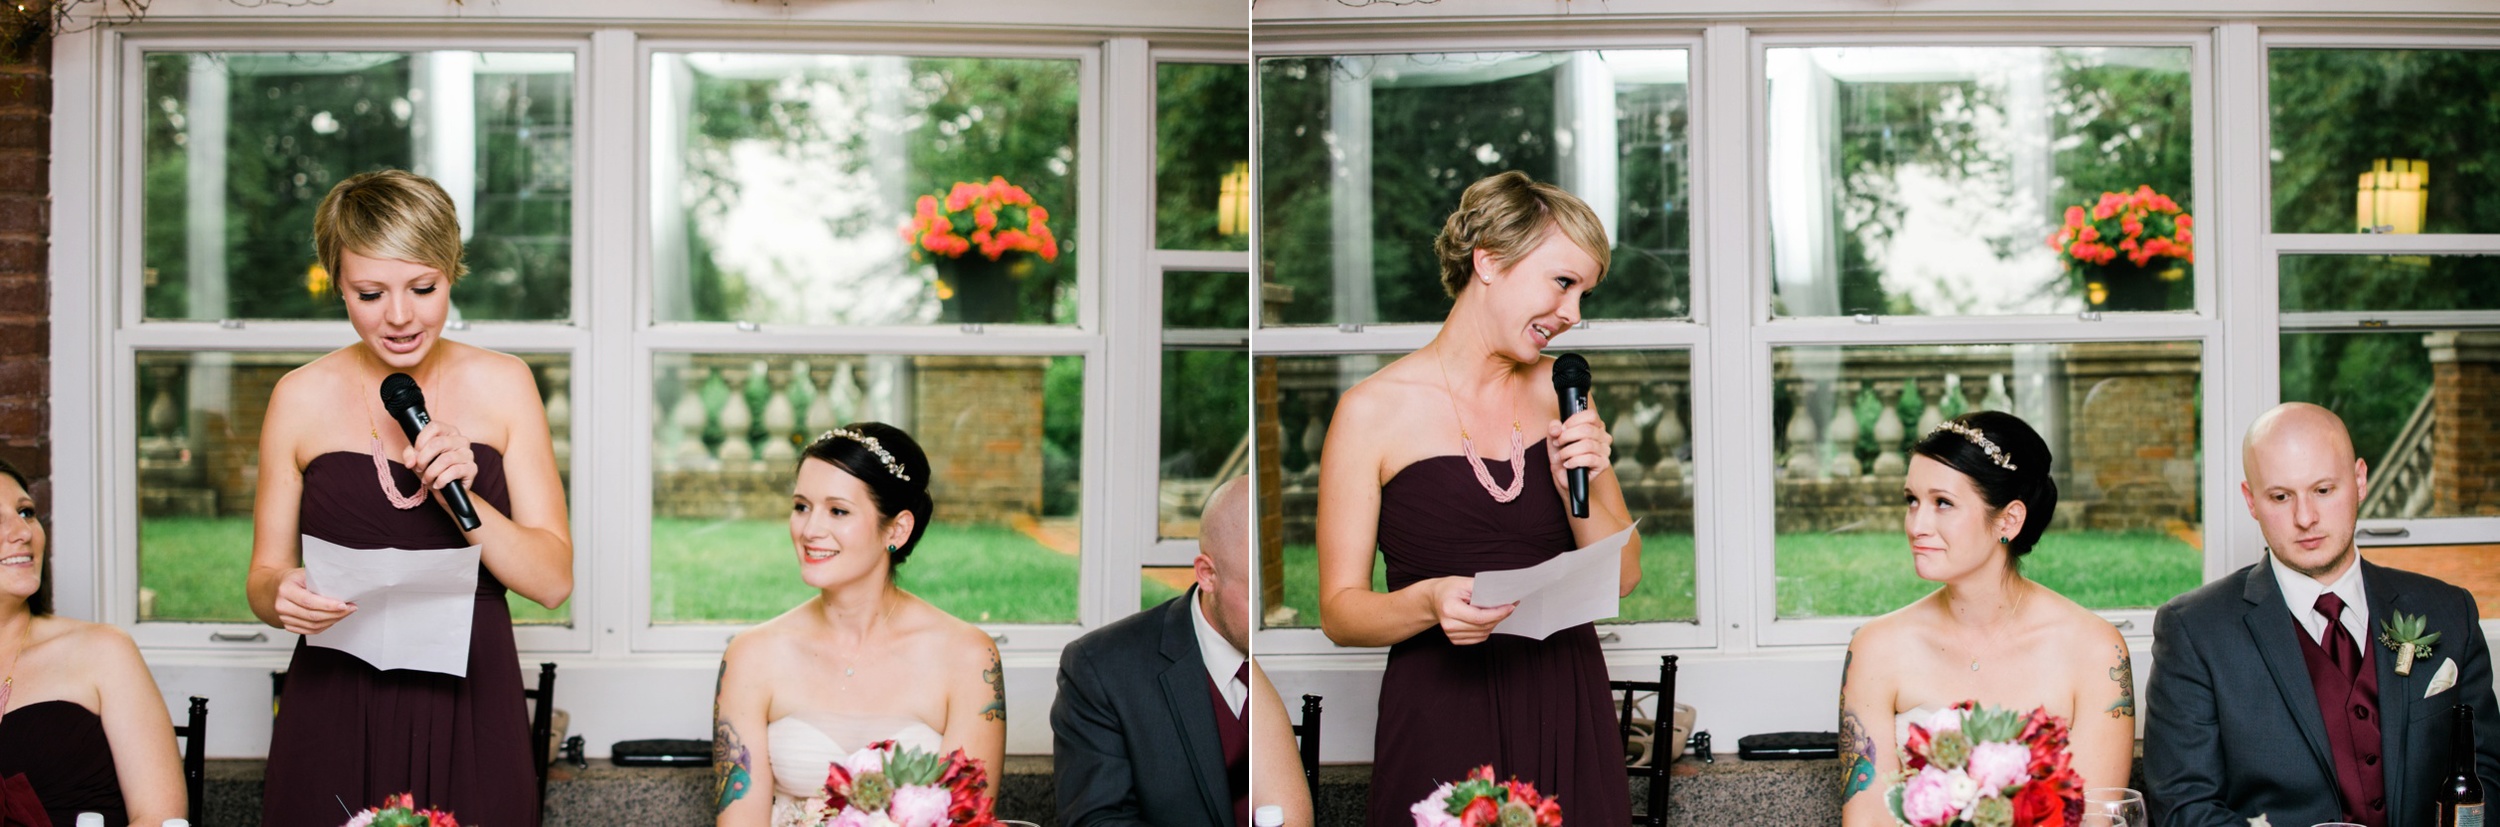 Glensheen Mansion Wedding | Duluth, MN Wedding Photographer_0519.jpg